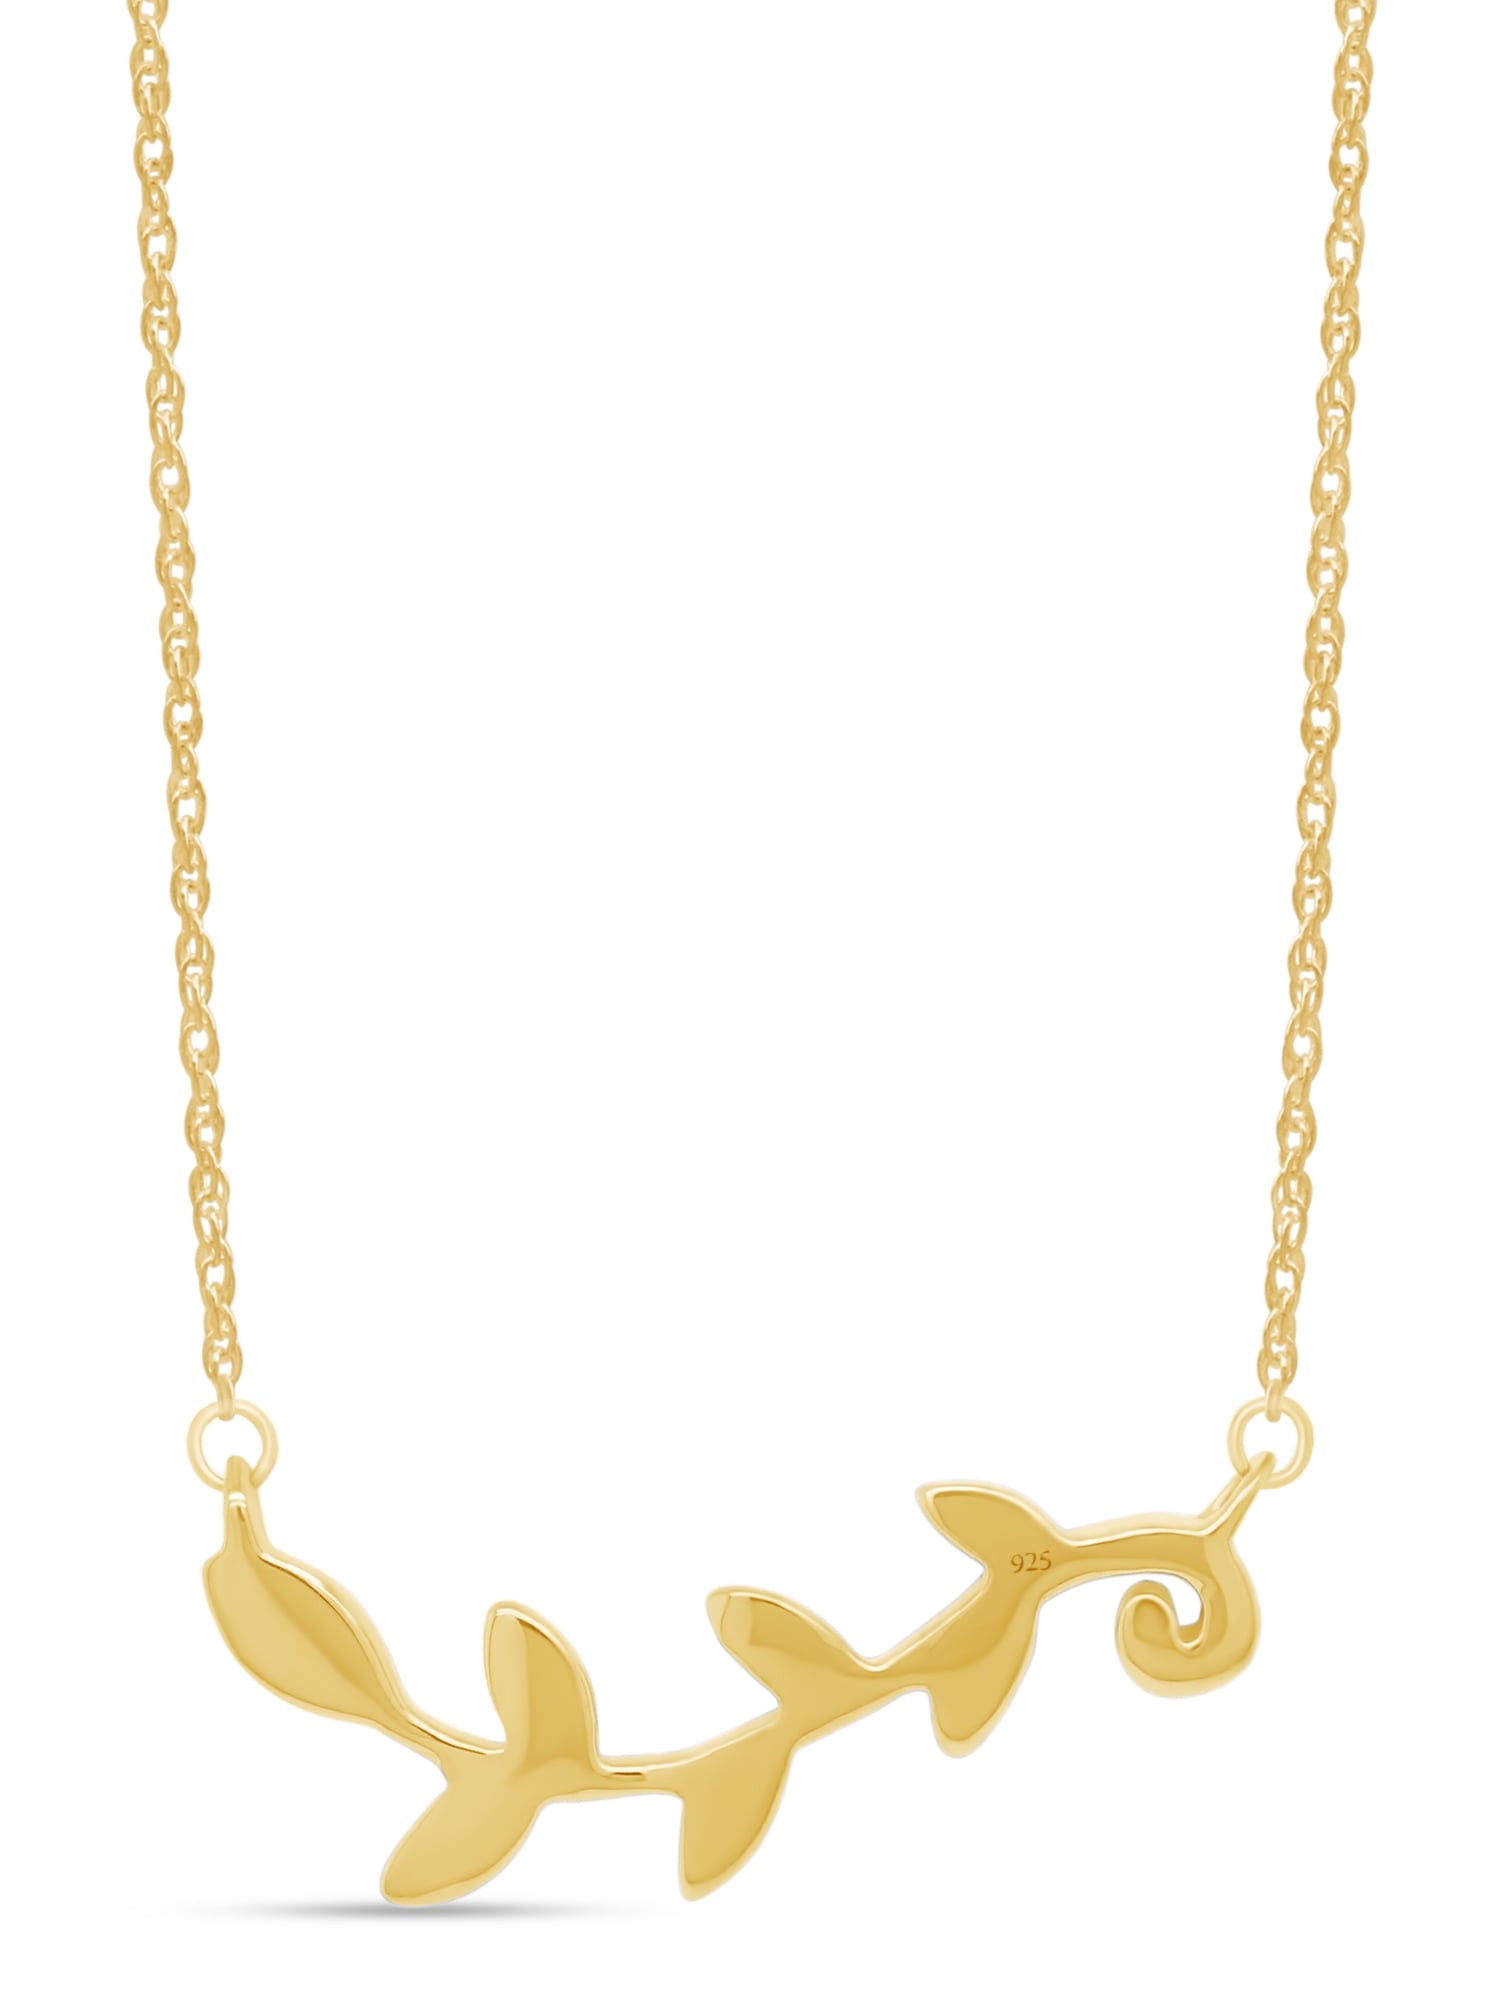 Louis Vuitton Keepall Olive Leaf Necklace 406398 | FonjepShops